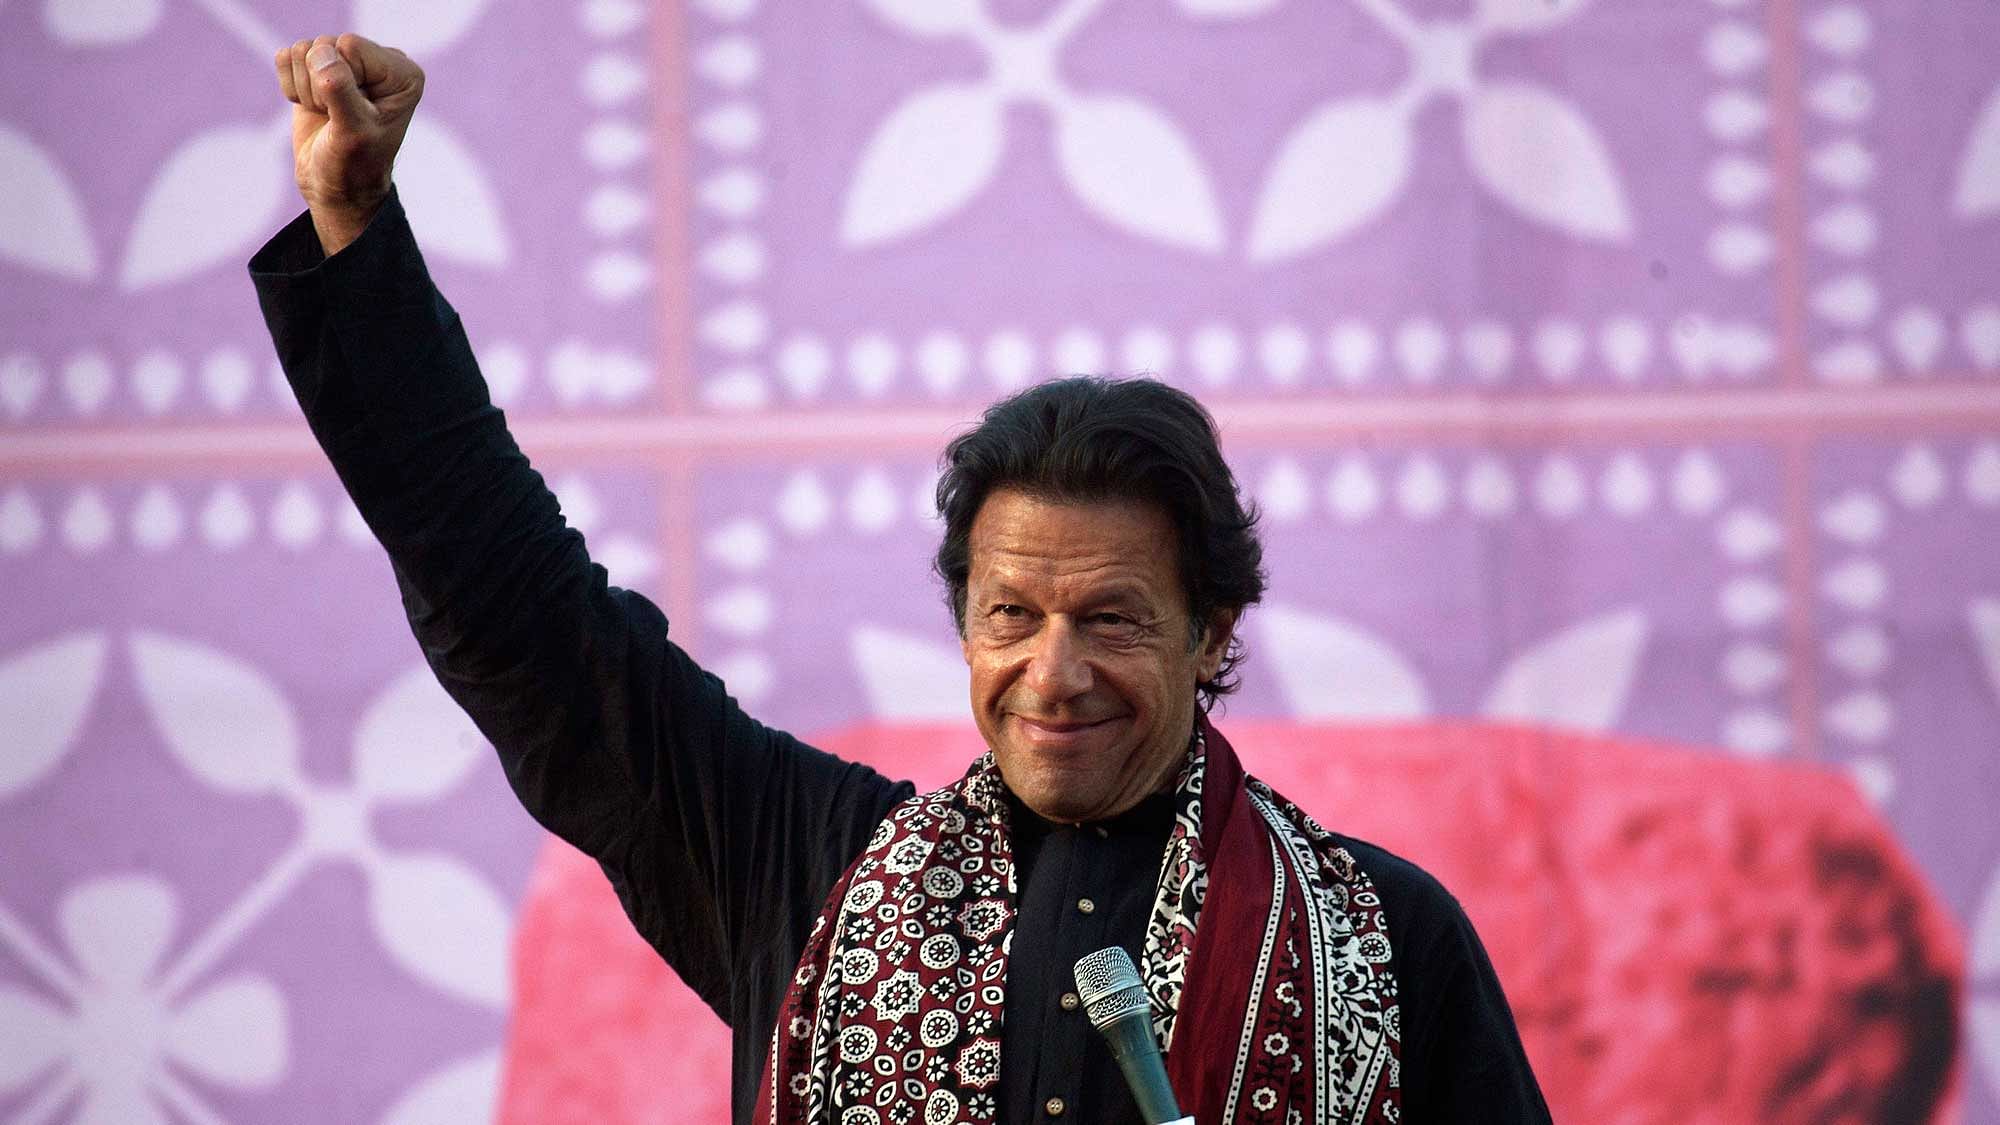 File photo of Pakistan’s cricketer-turned-politician Imran Khan.